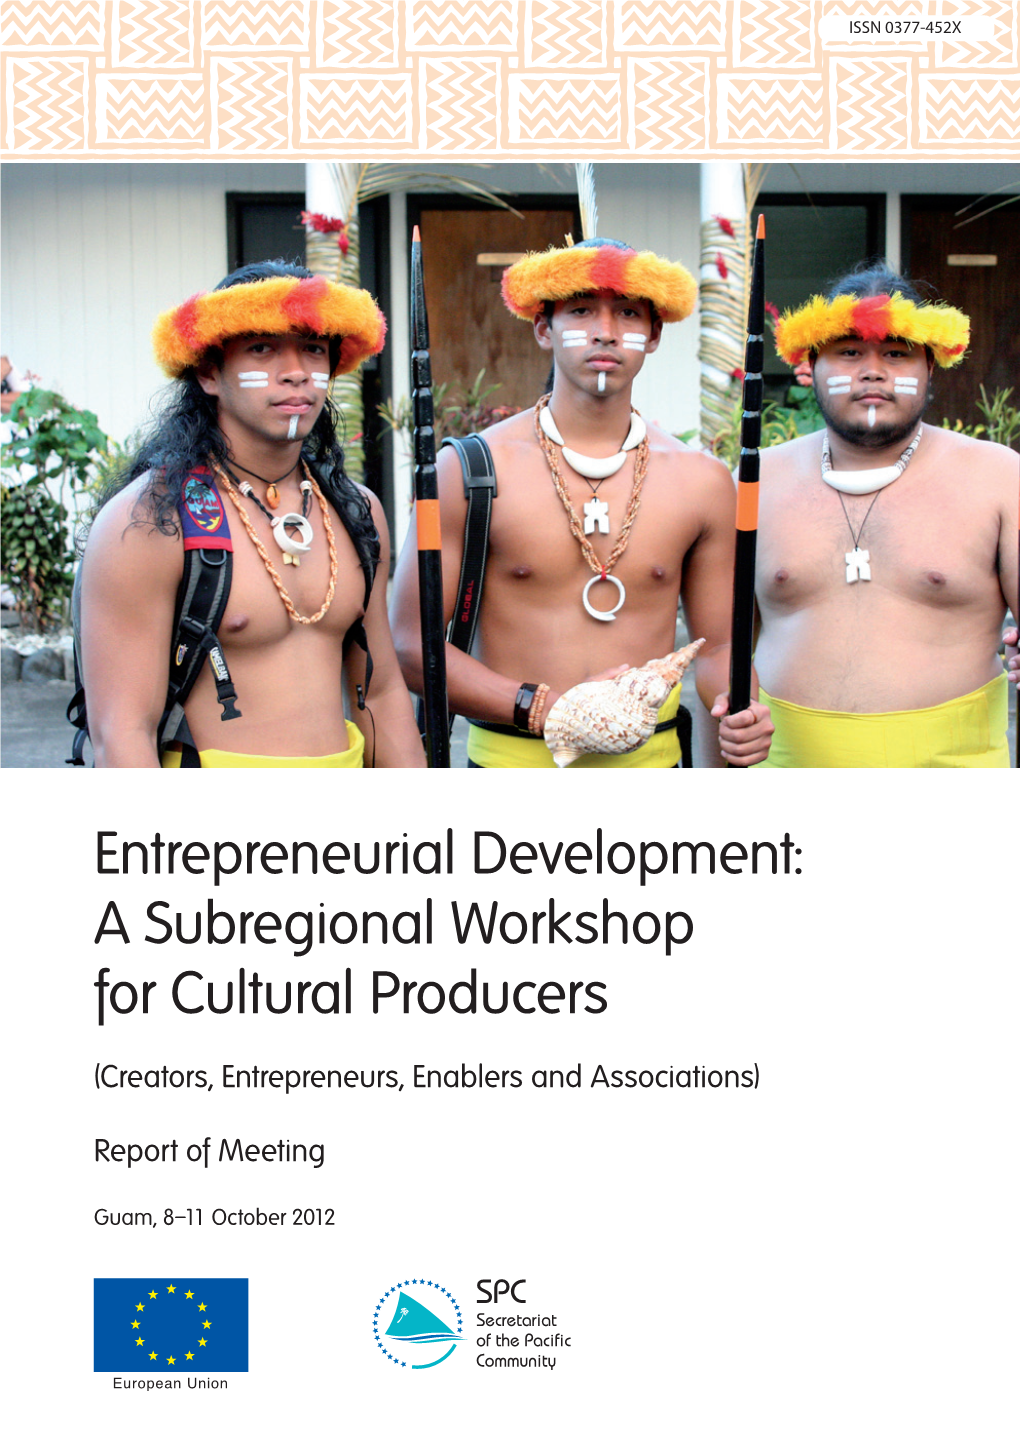 Entrepreneurial Development: a Subregional Workshop for Cultural Producers, Guam, 8-11 October 2012